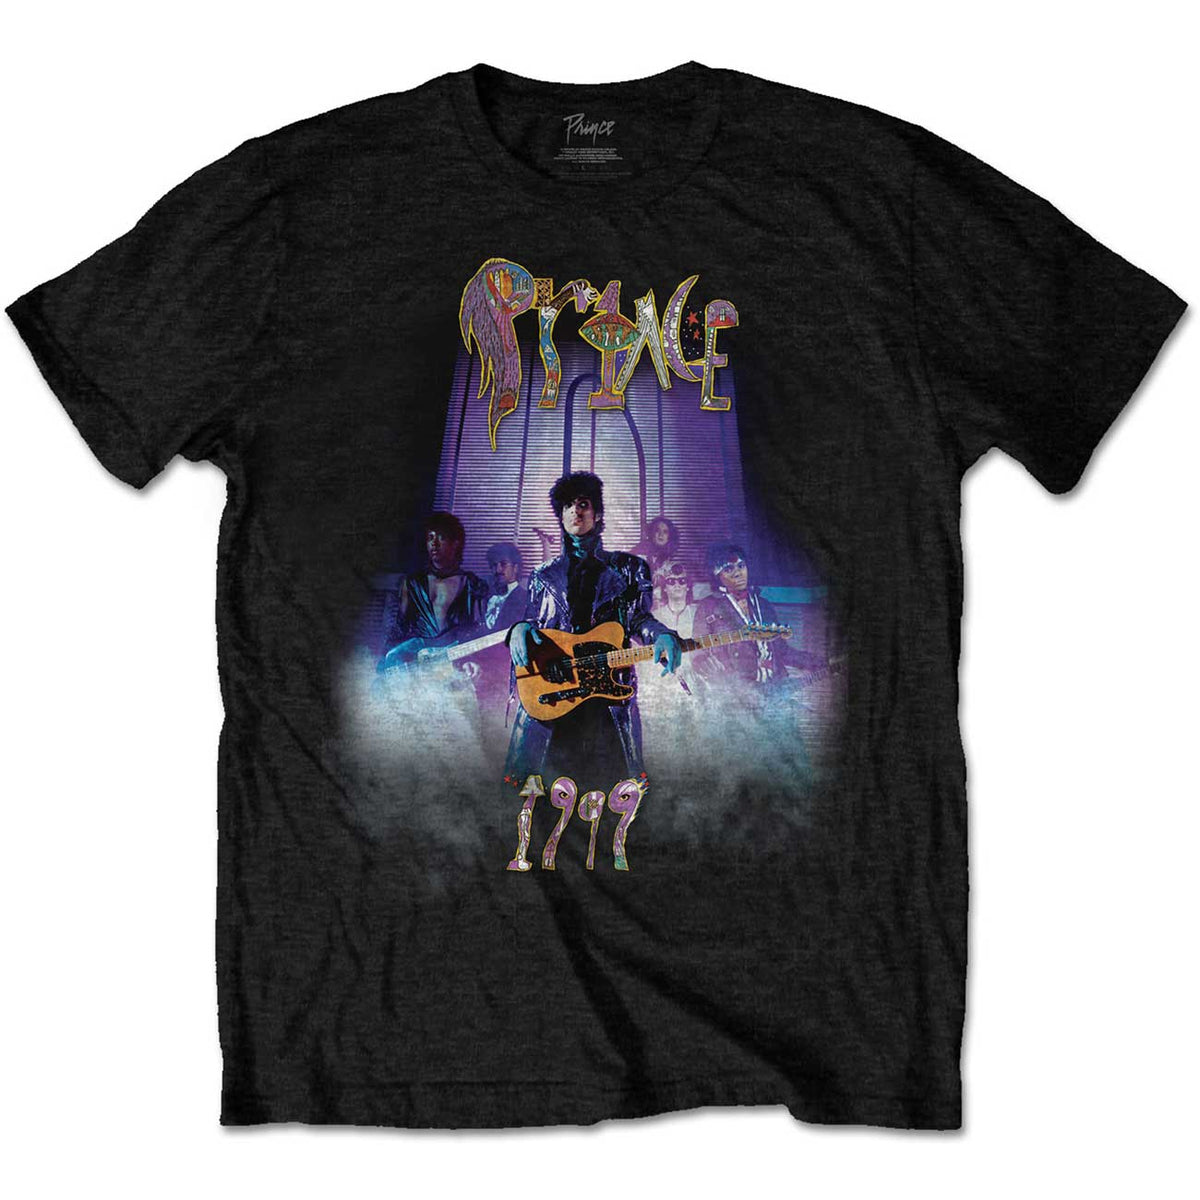 Prince T-Shirt - 1999 Smoke - Unisex Official Licensed Design